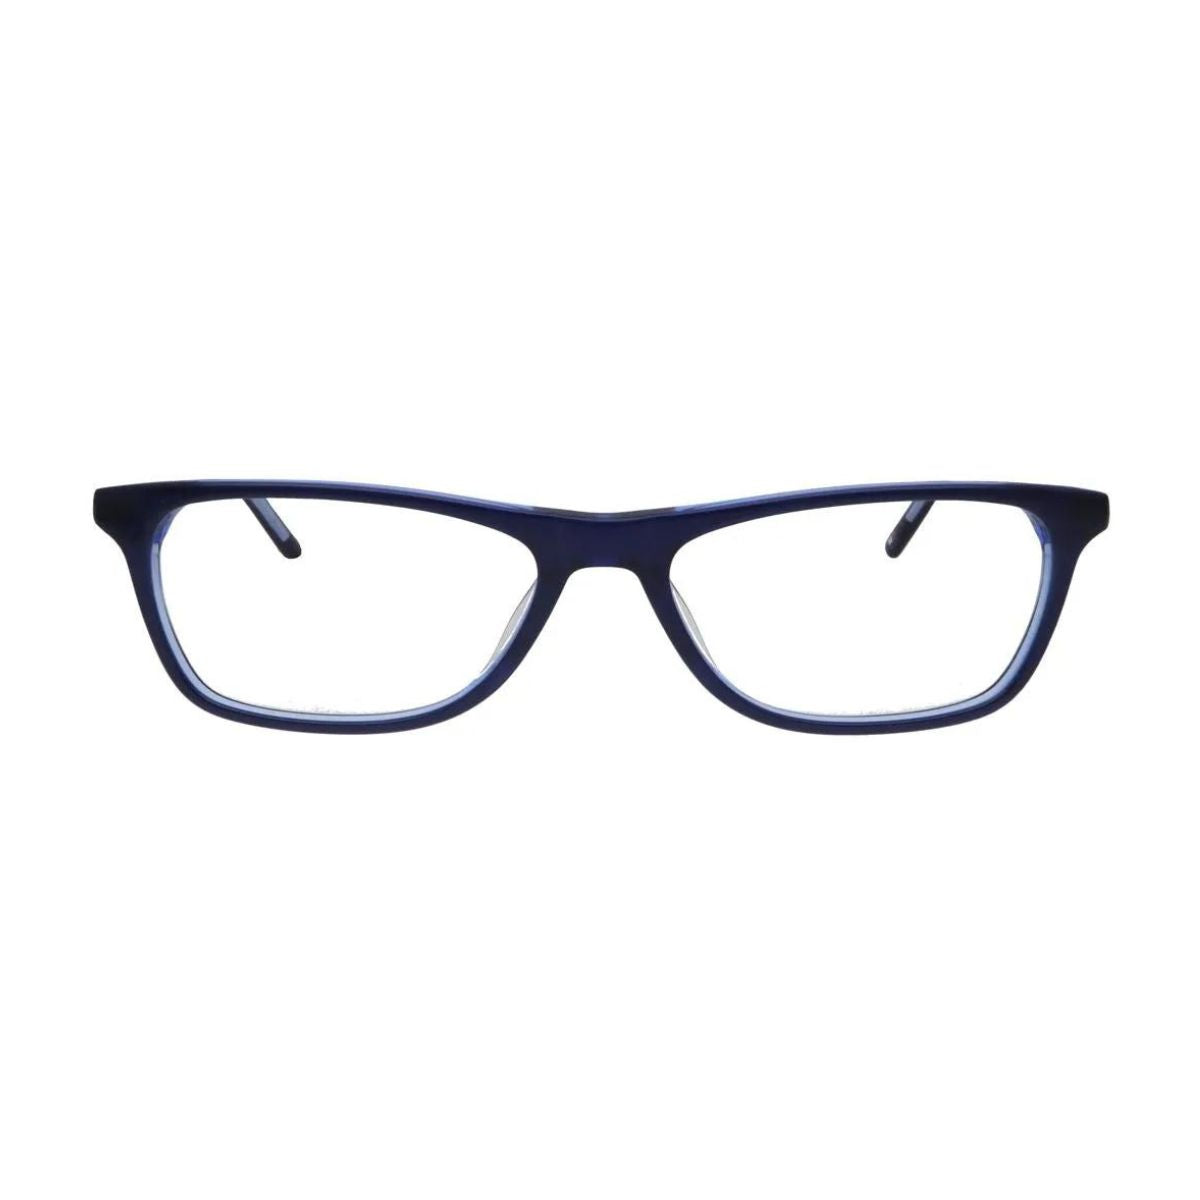 "Tommy Hilfiger 3204 C4 prescription glasses frame for men's and women's at optorium"